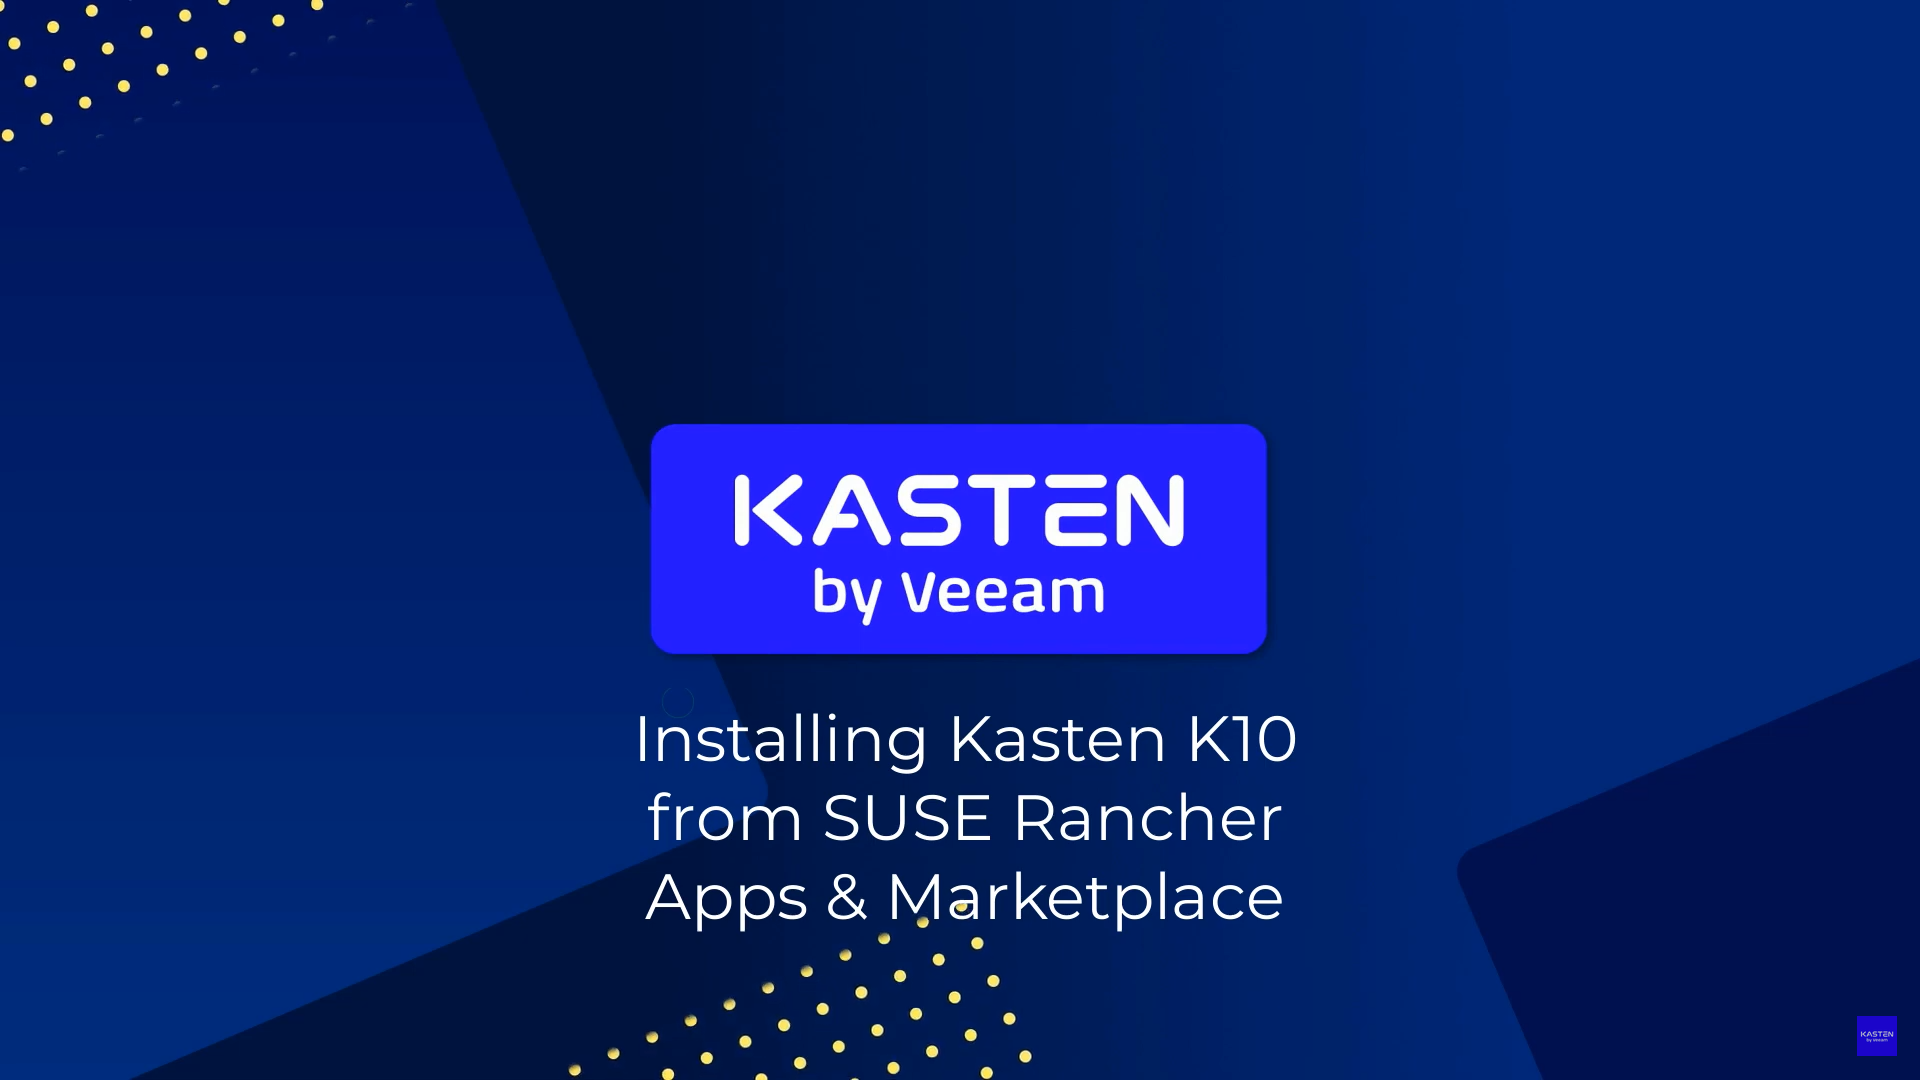 Demo SUSE Rancher with Kasten K10